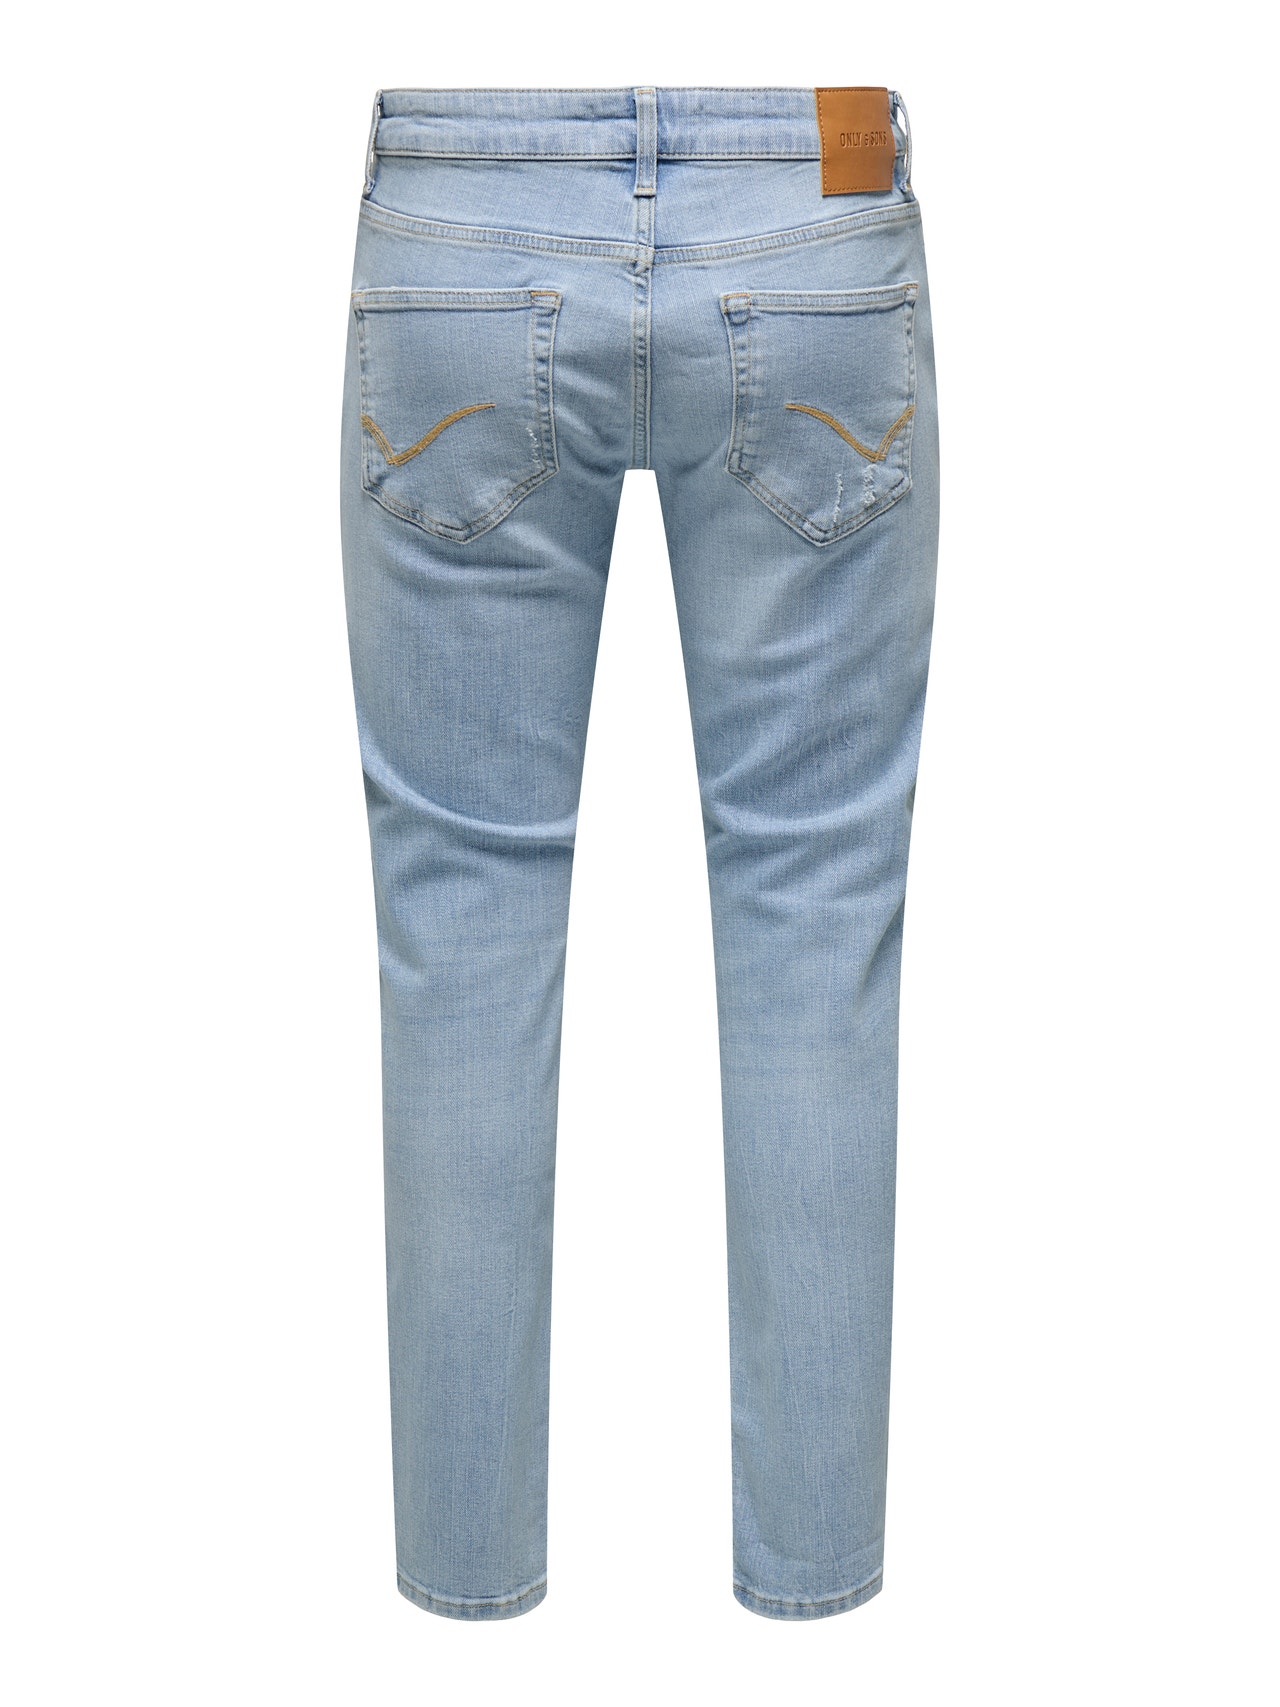 ONLY & SONS ONSLoom Slim Jeans -Light Blue Denim - 22029240